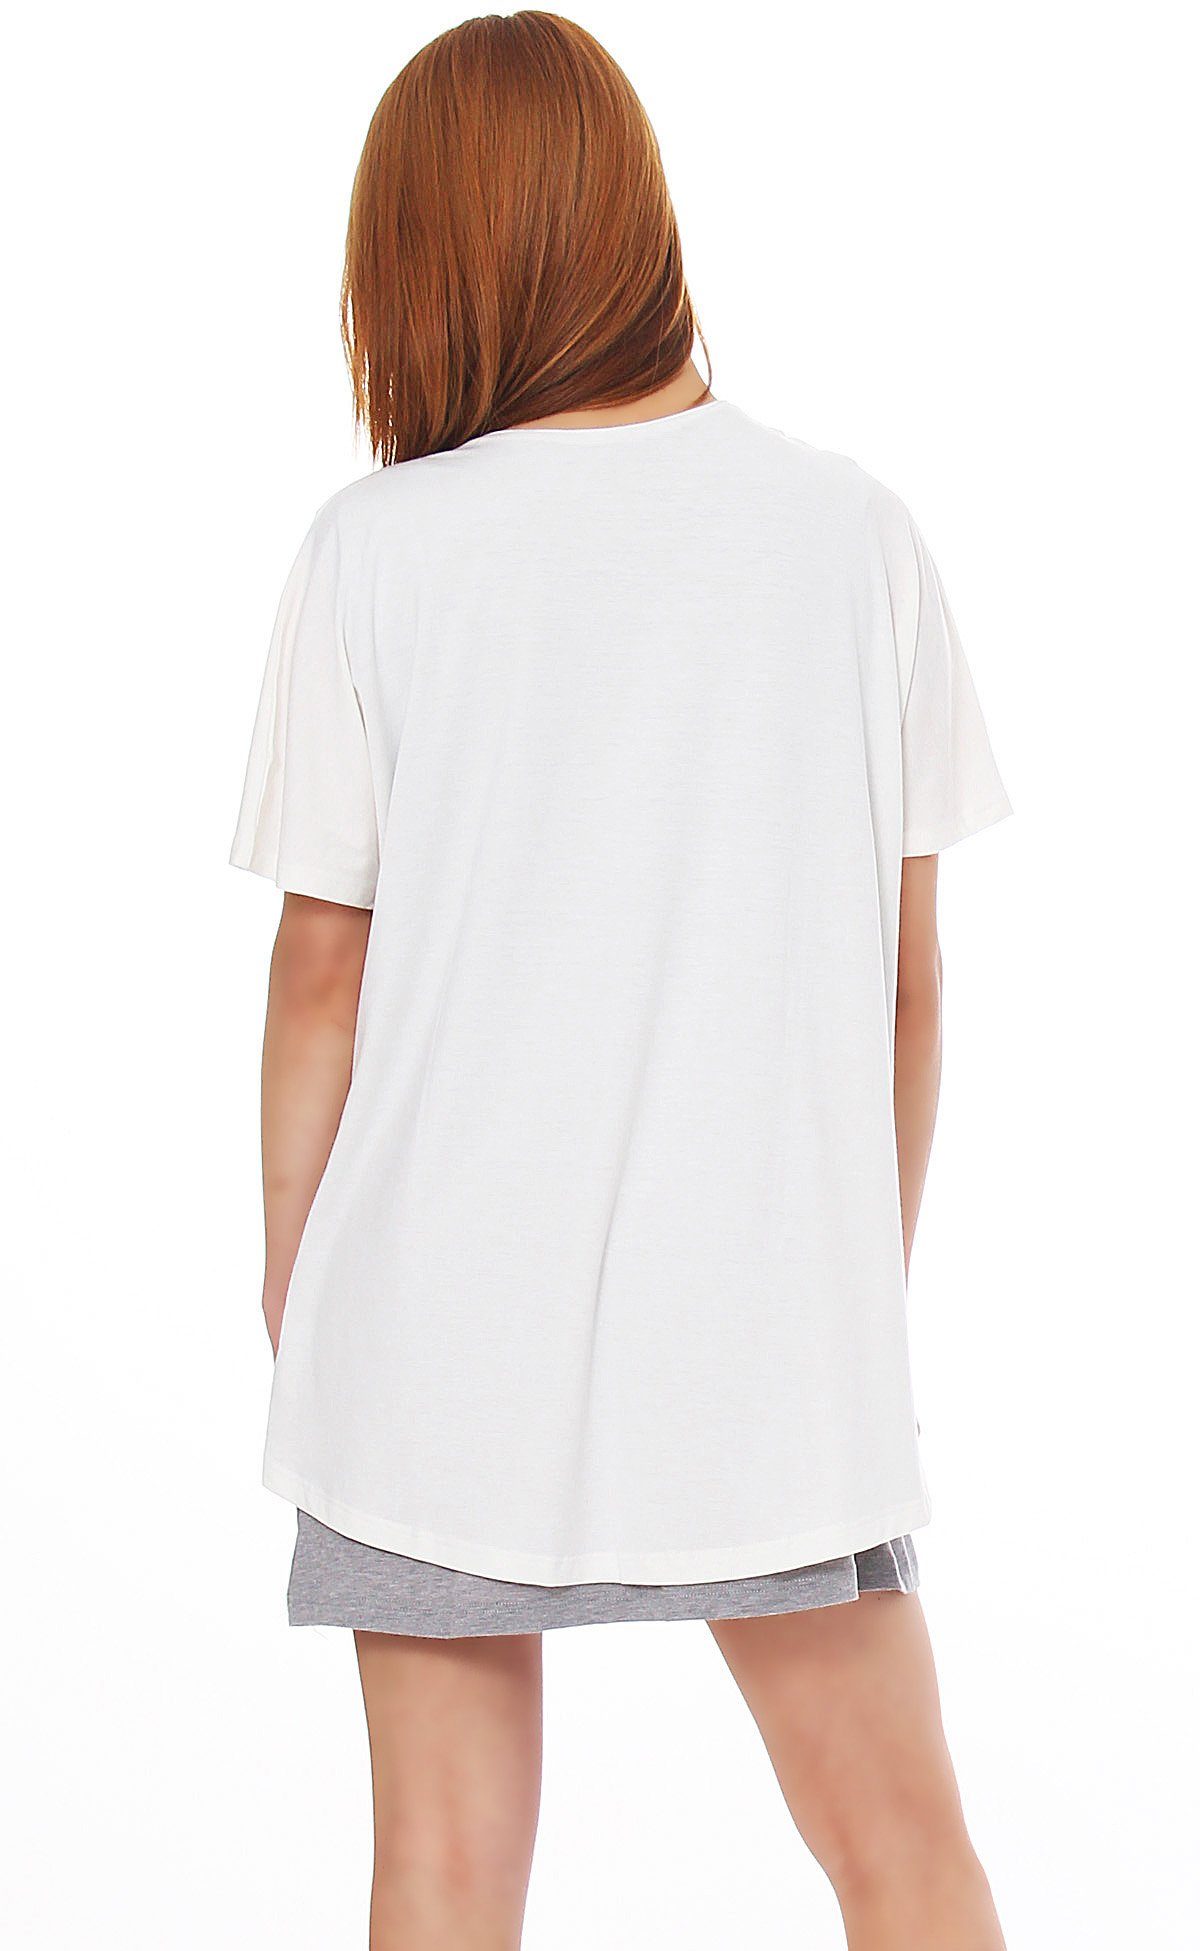 Mississhop 2-in-1-Shirt Damen Bluse Kurzarmshirt Longshirt Grau Kleid Kreme T-Shirt Oberteil 